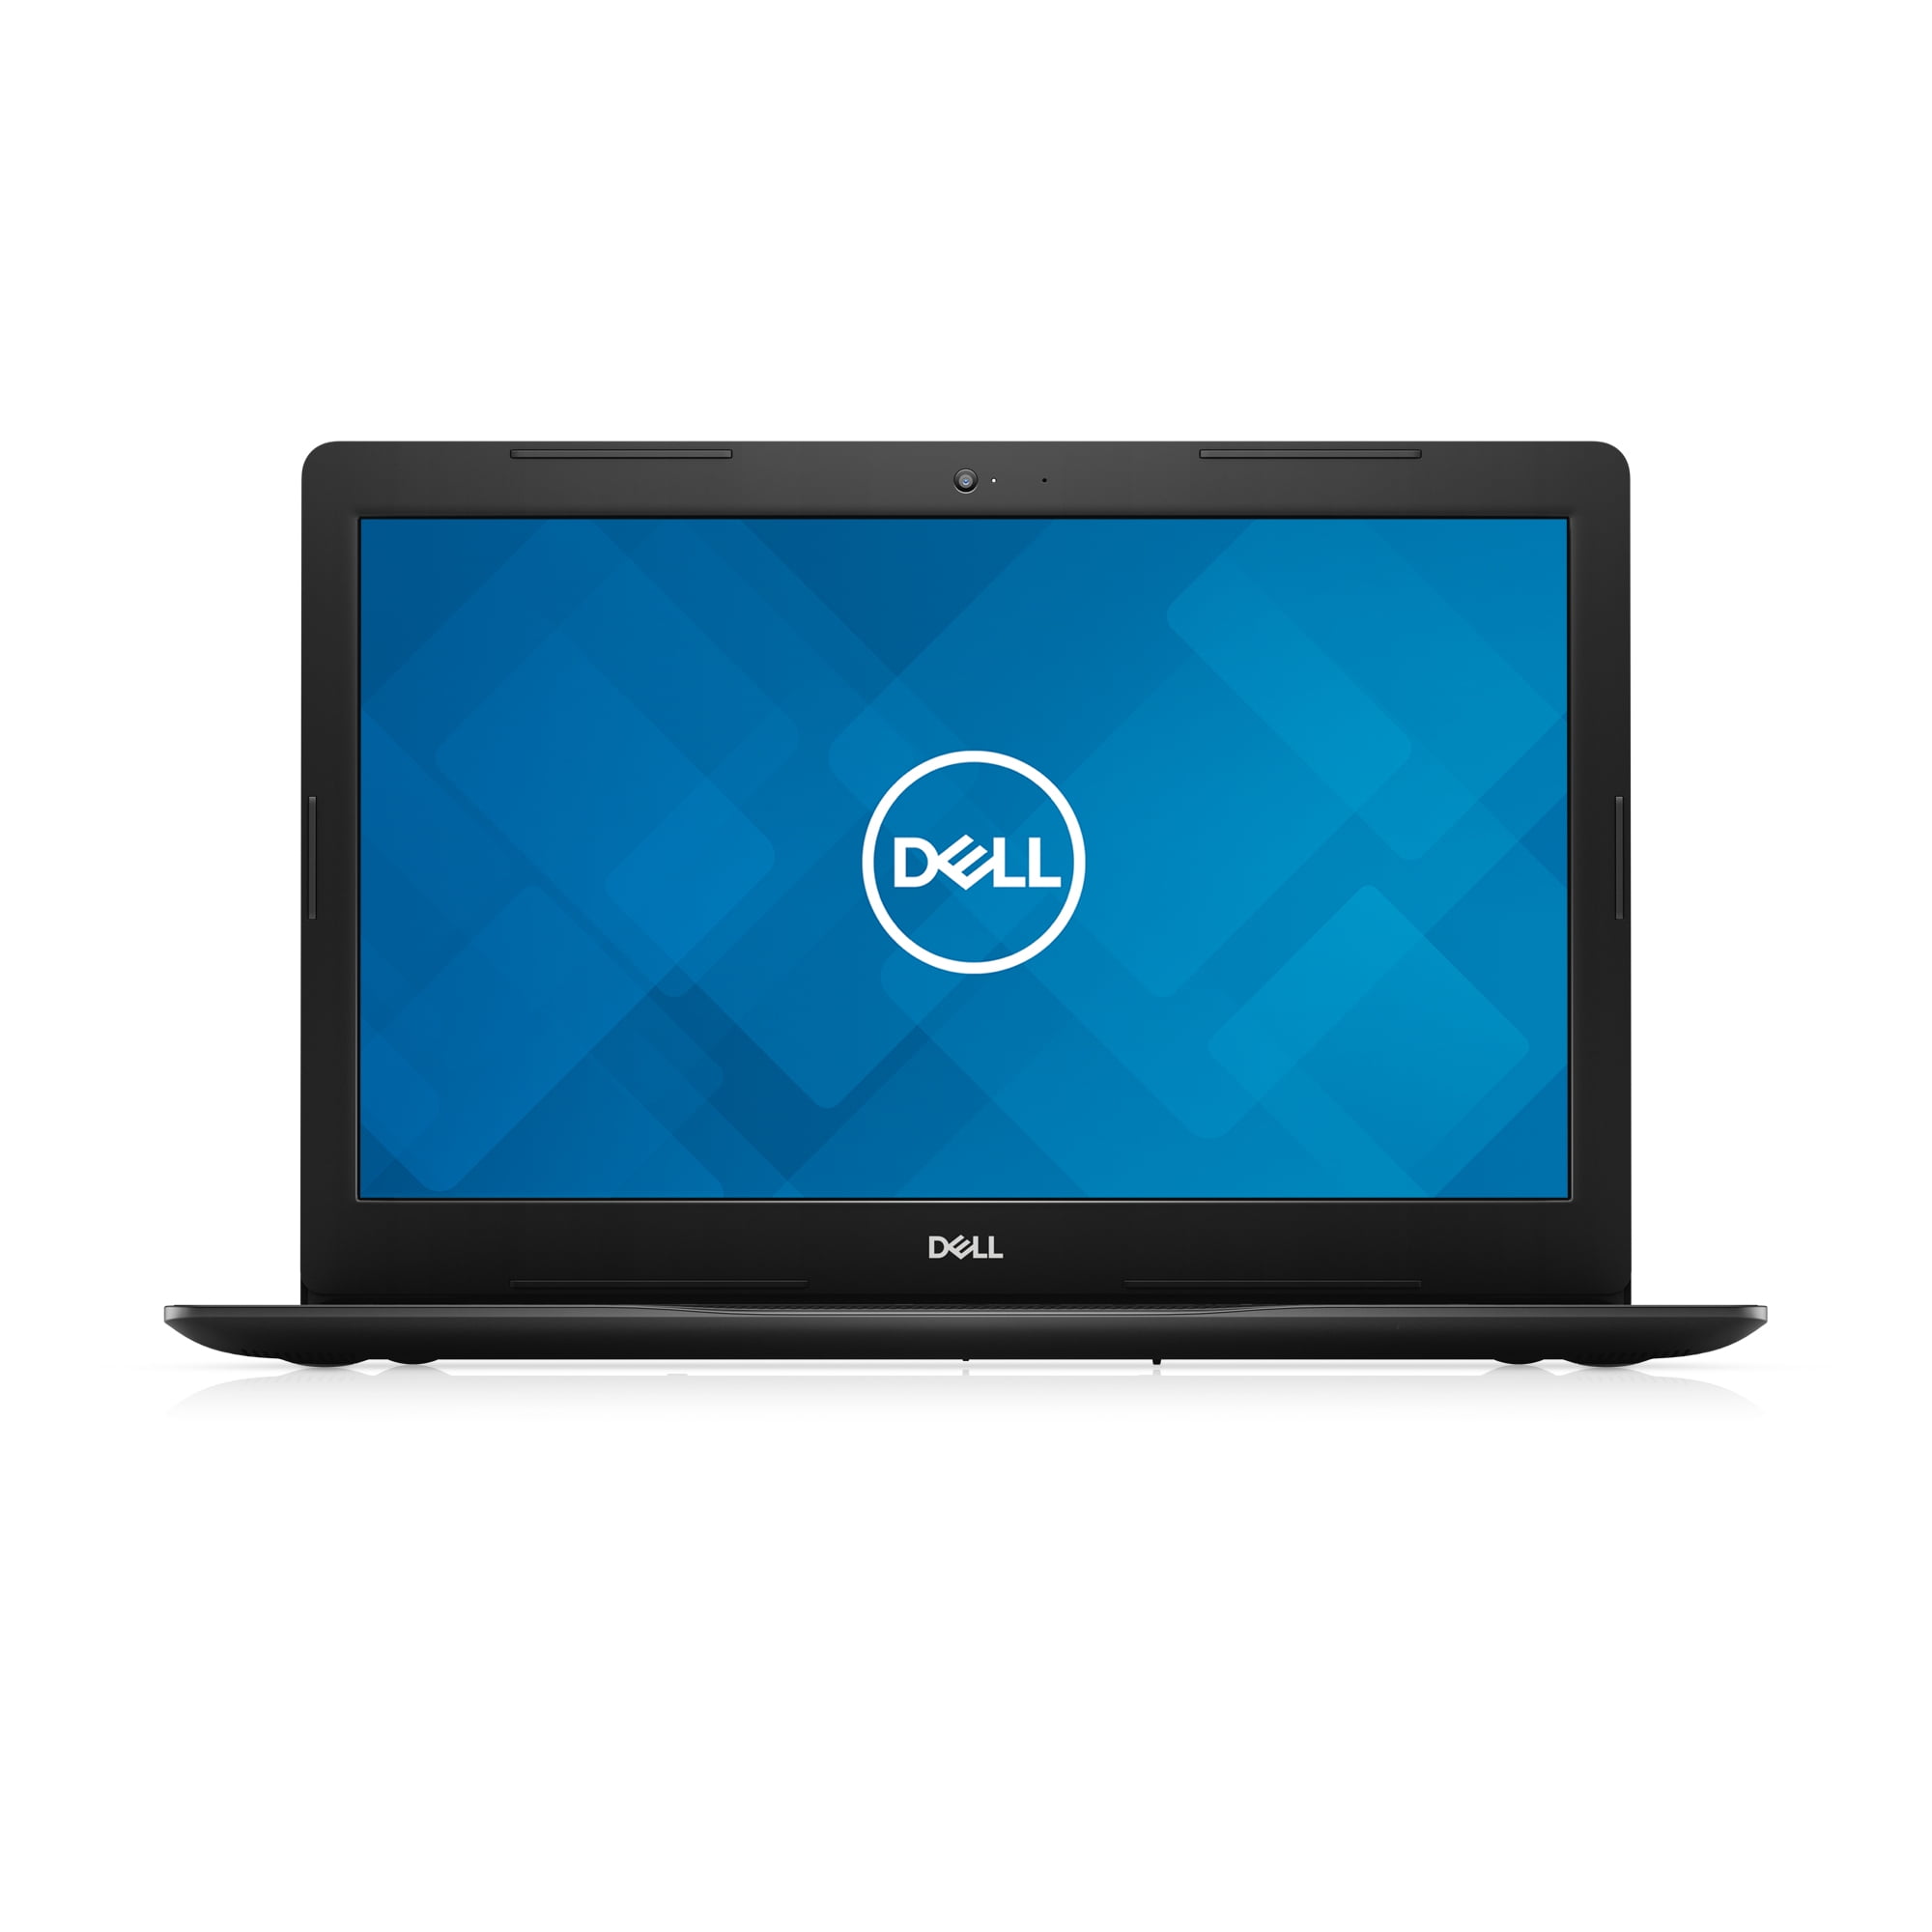 Dell Inspiron 15 3580 Laptop, 15.6